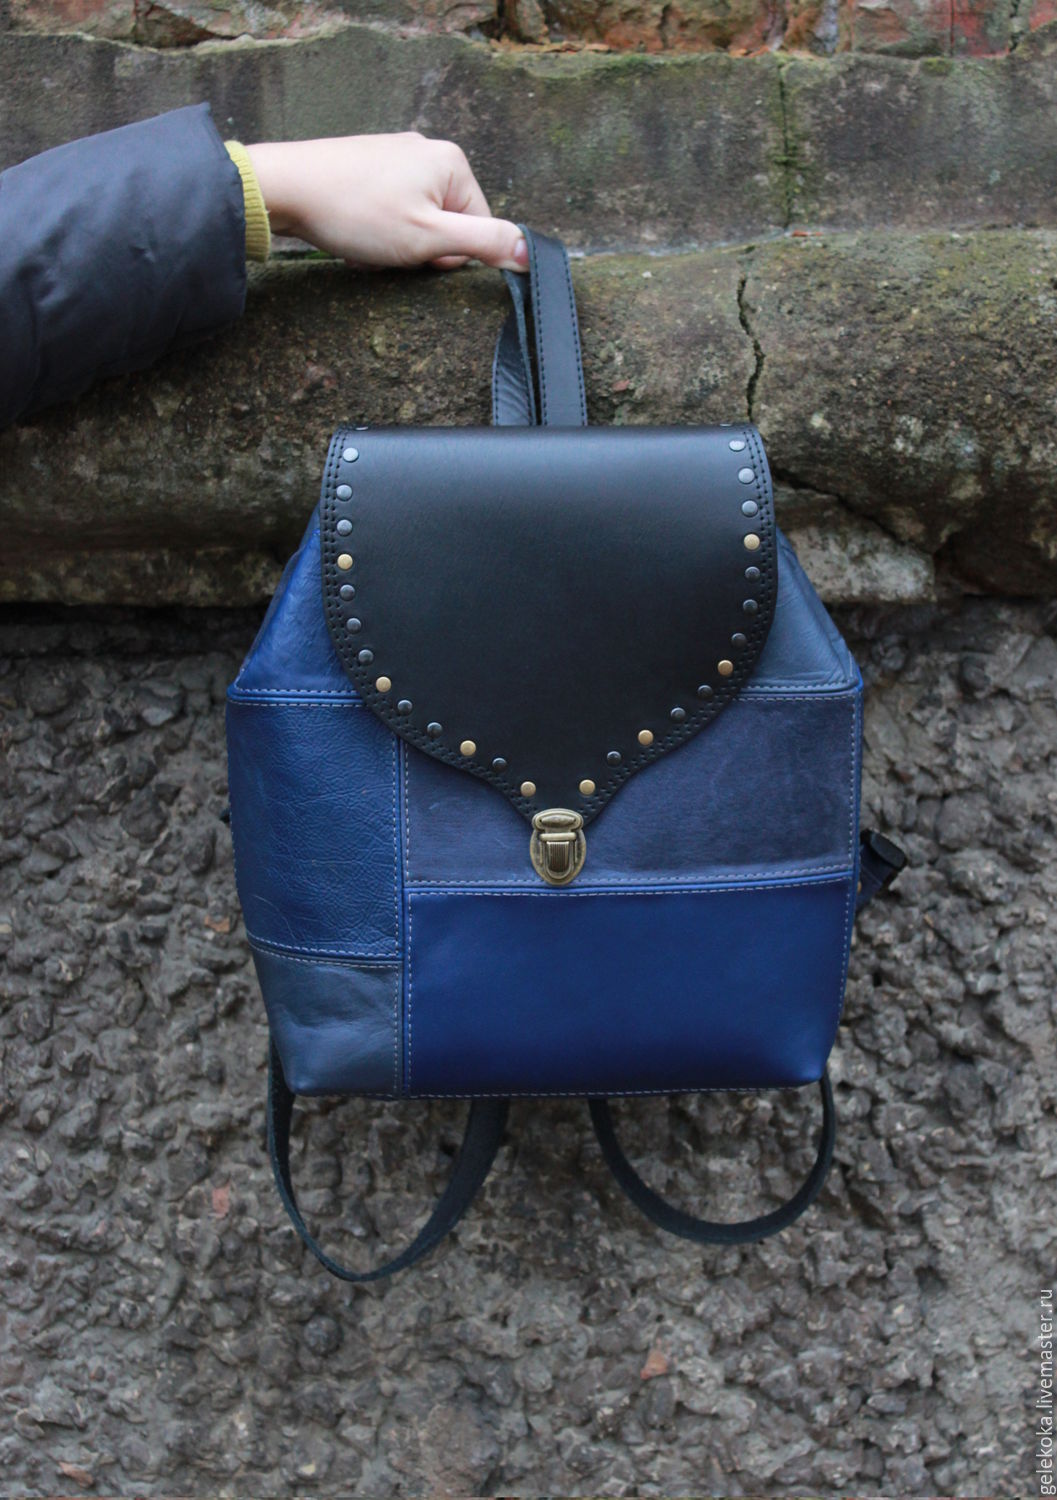 Backpack genuine leather Bohemian blue with rivets, Backpacks, St. Petersburg,  Фото №1